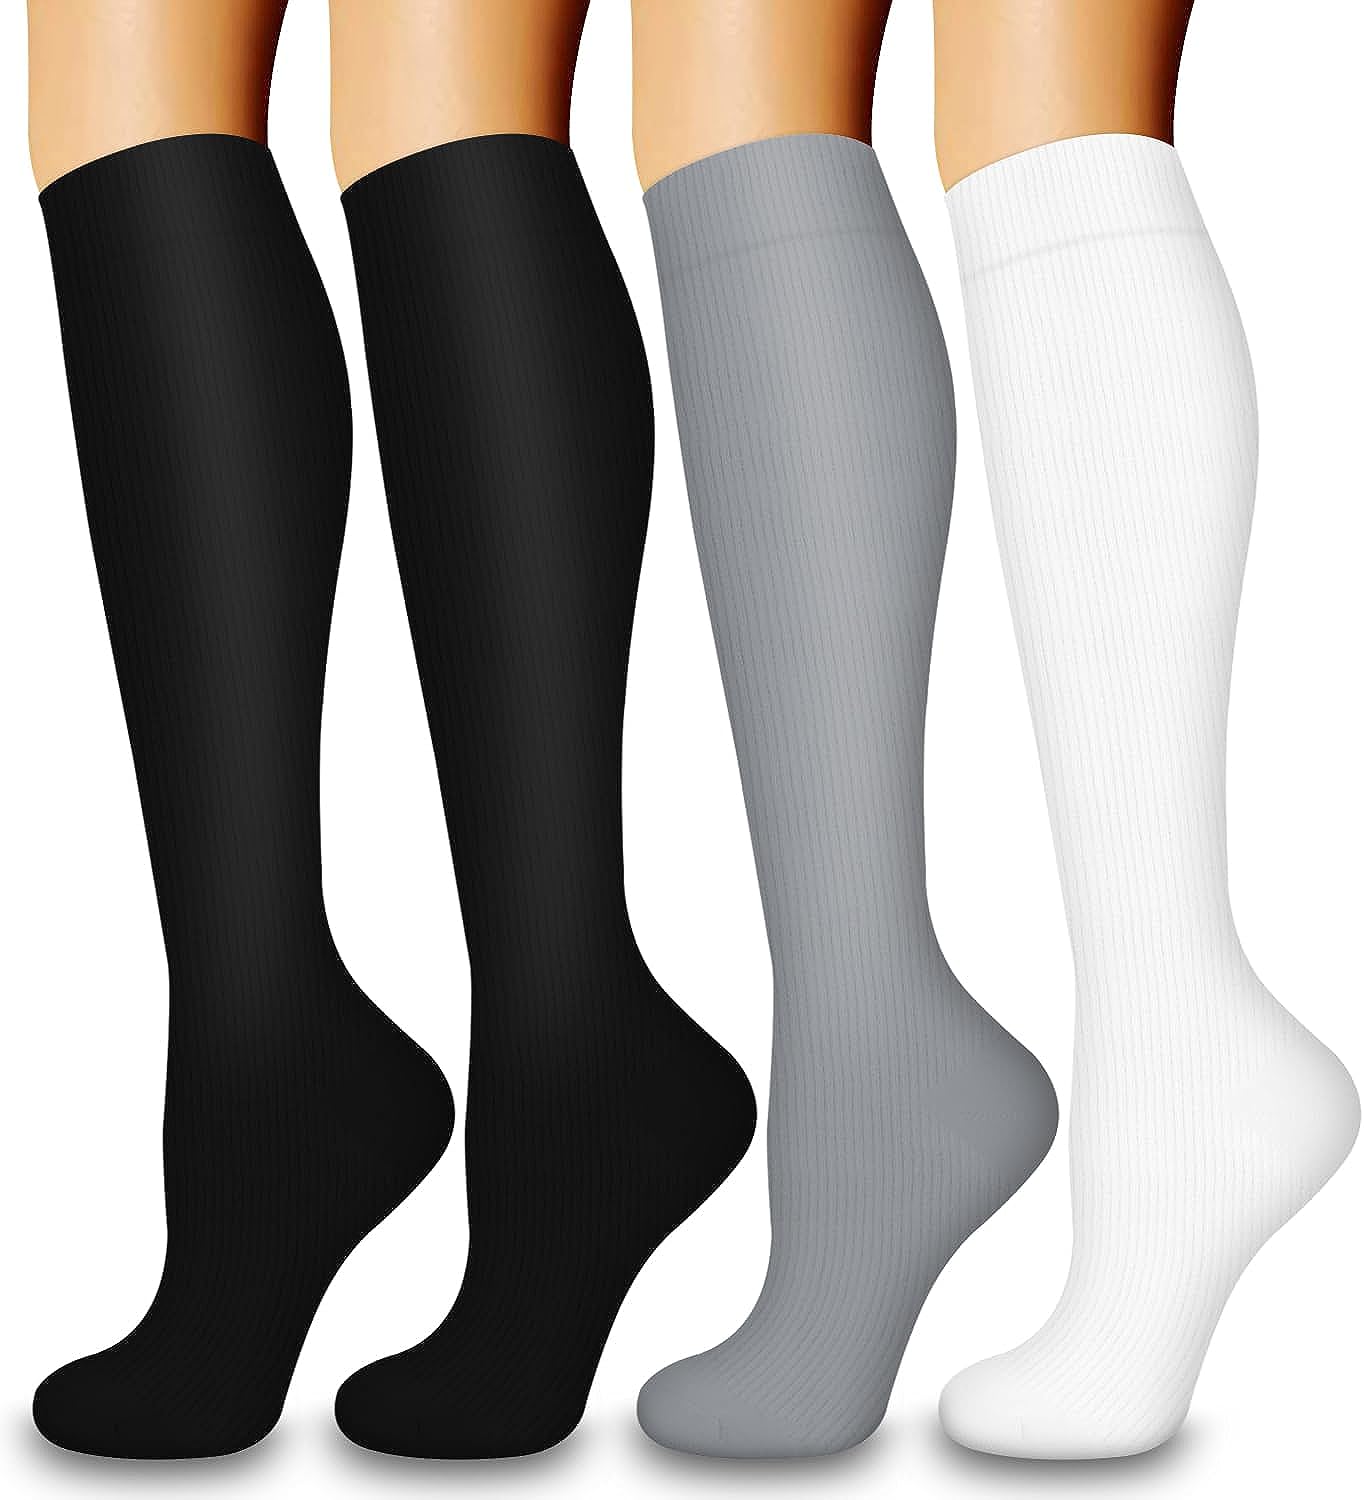 Laite Hebe compression socks,Black+White+Grey,S/M (3 pairs)